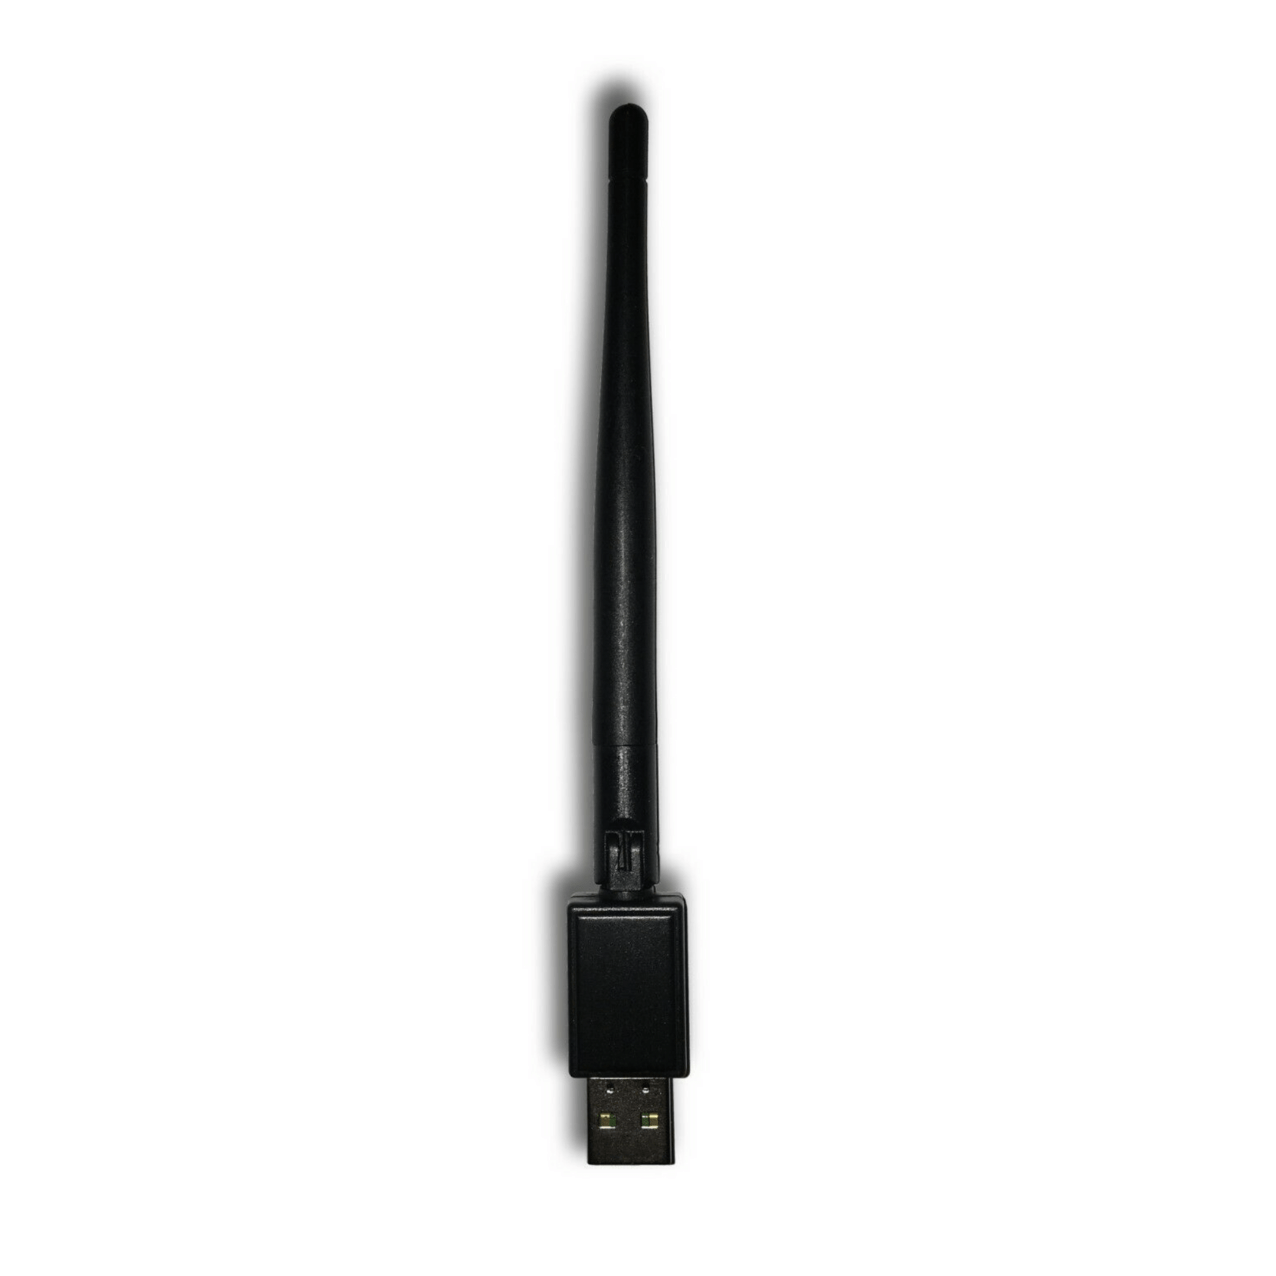 WIFI DONGLE ISTAR WIFI USB ADAPTER Plus and Zeed 